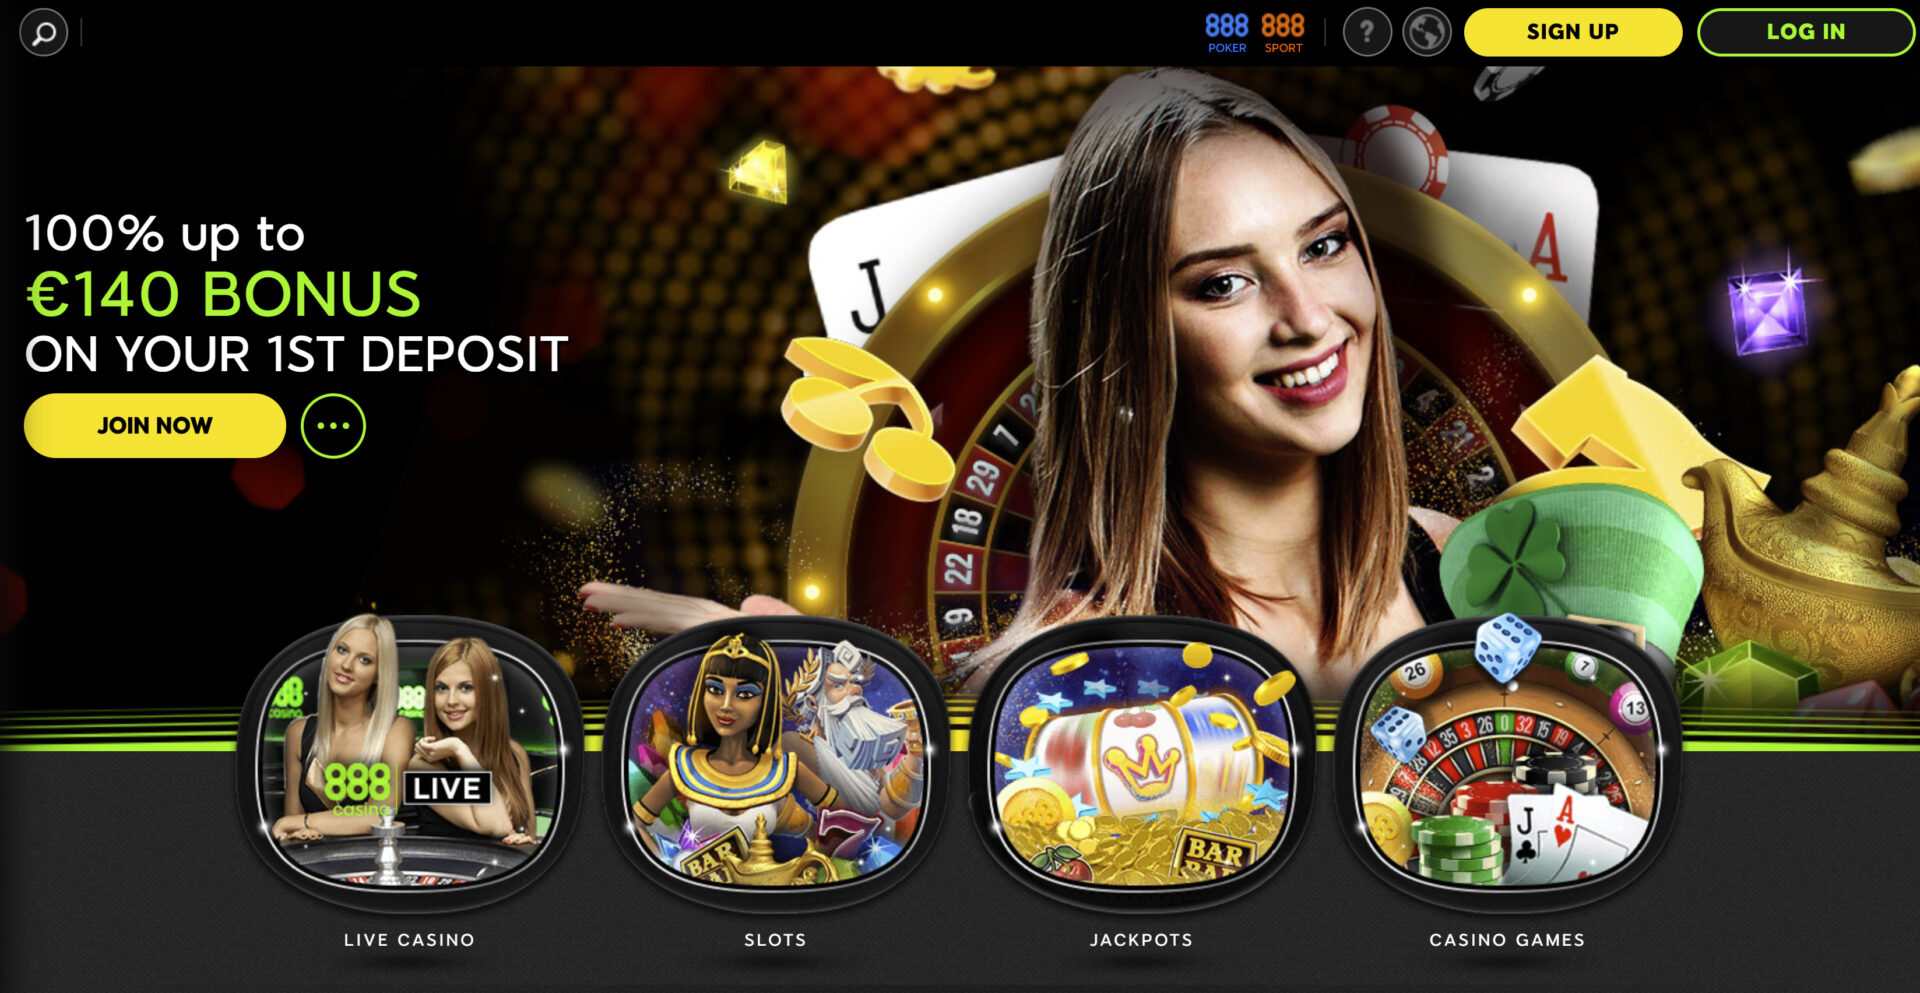 First Deposit Bonus Casino Not On Gamstop - Casinos Not On Gamstop